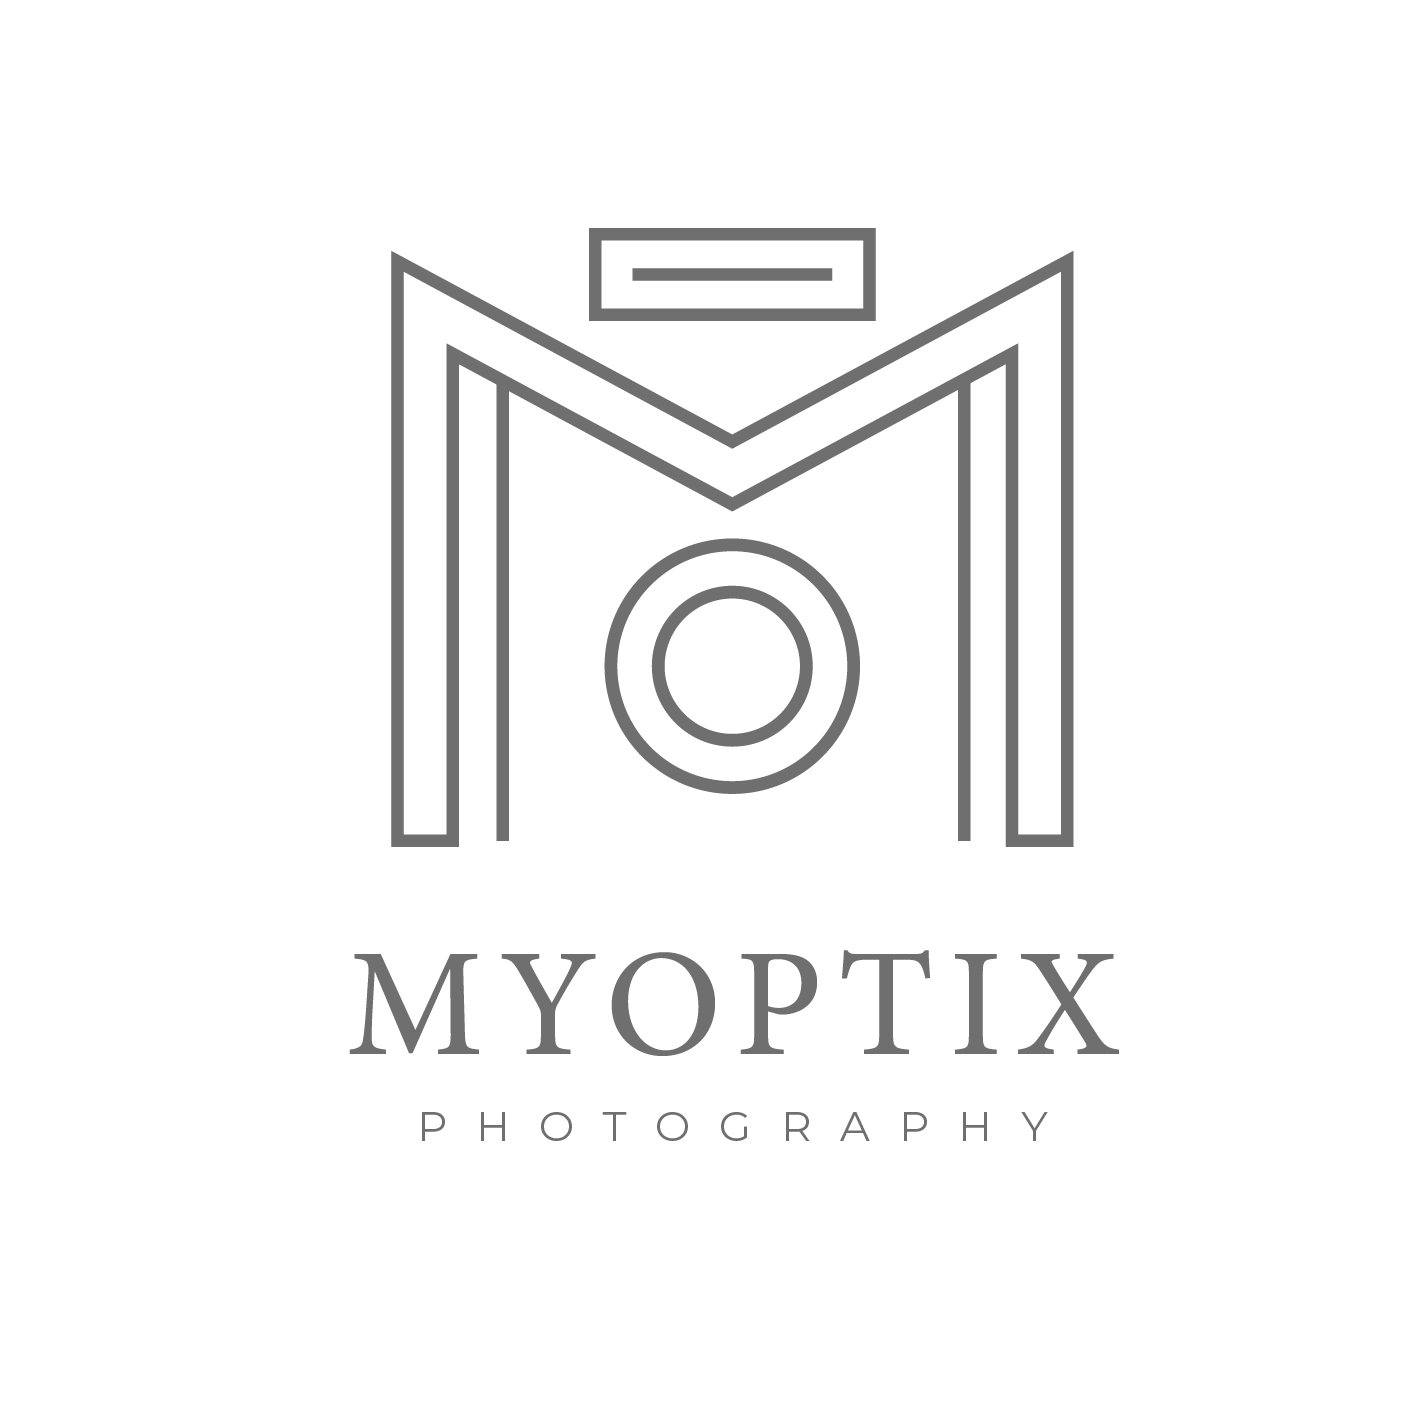 Myoptix Photography